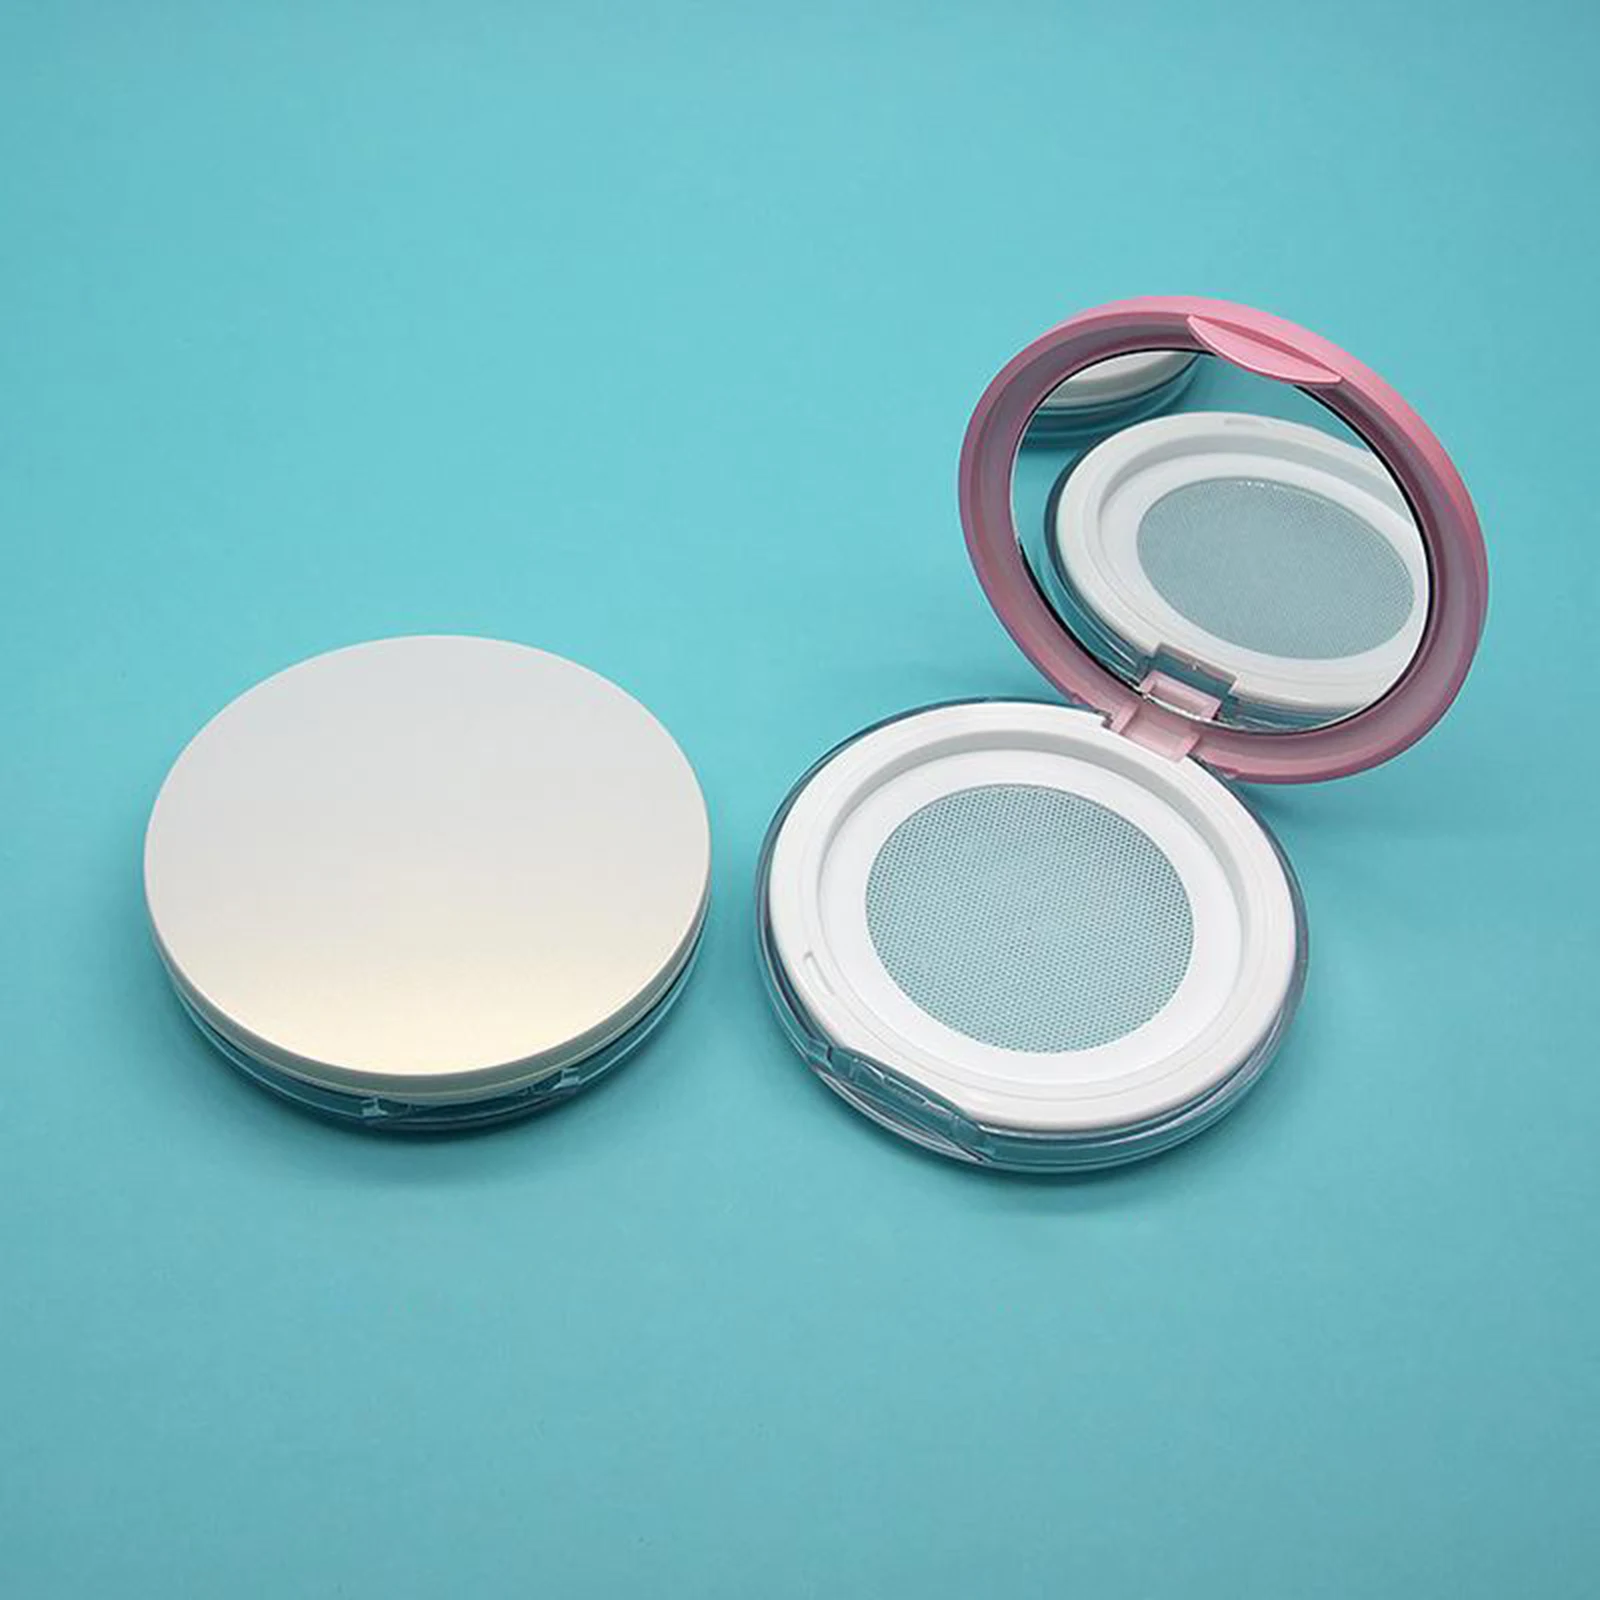 Capacity 0.1 oz Plastic Empty Powder Case Face Powder Makeup Jar Travel Kit